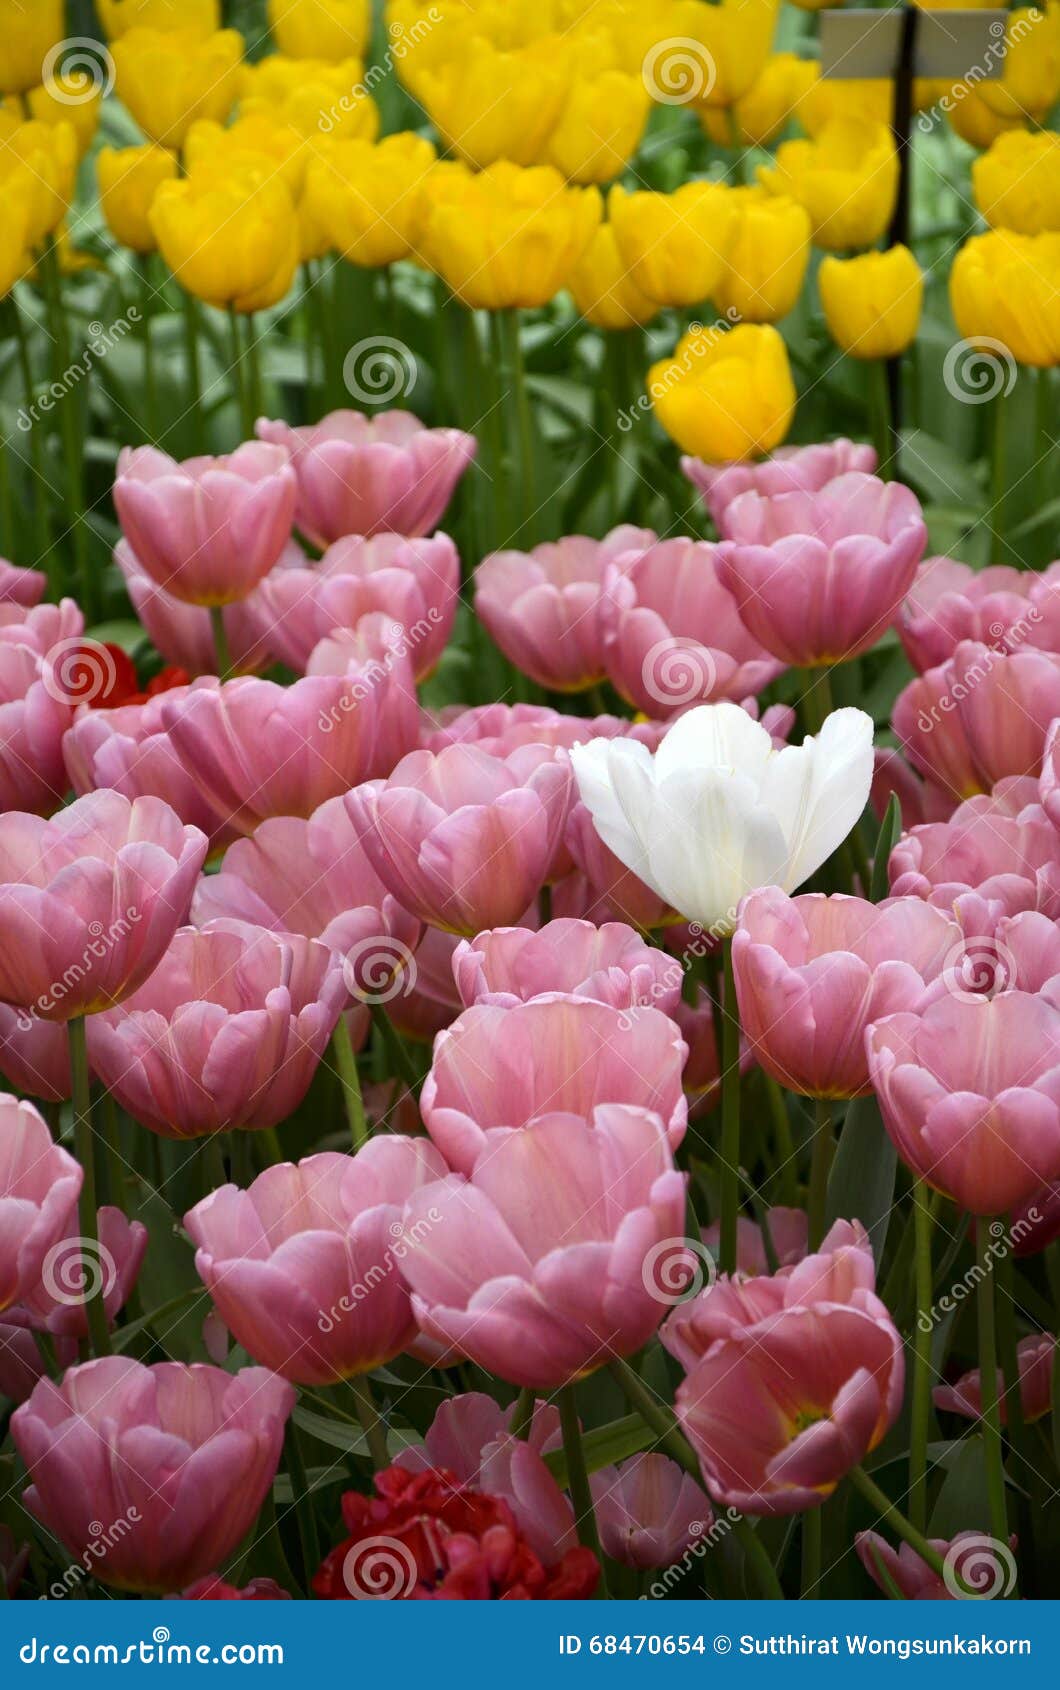 Tulipe Blanche Exceptionnelle Parmi La Tulipe Rose Et Jaune Photo stock -  Image du rose, blanc: 68470654